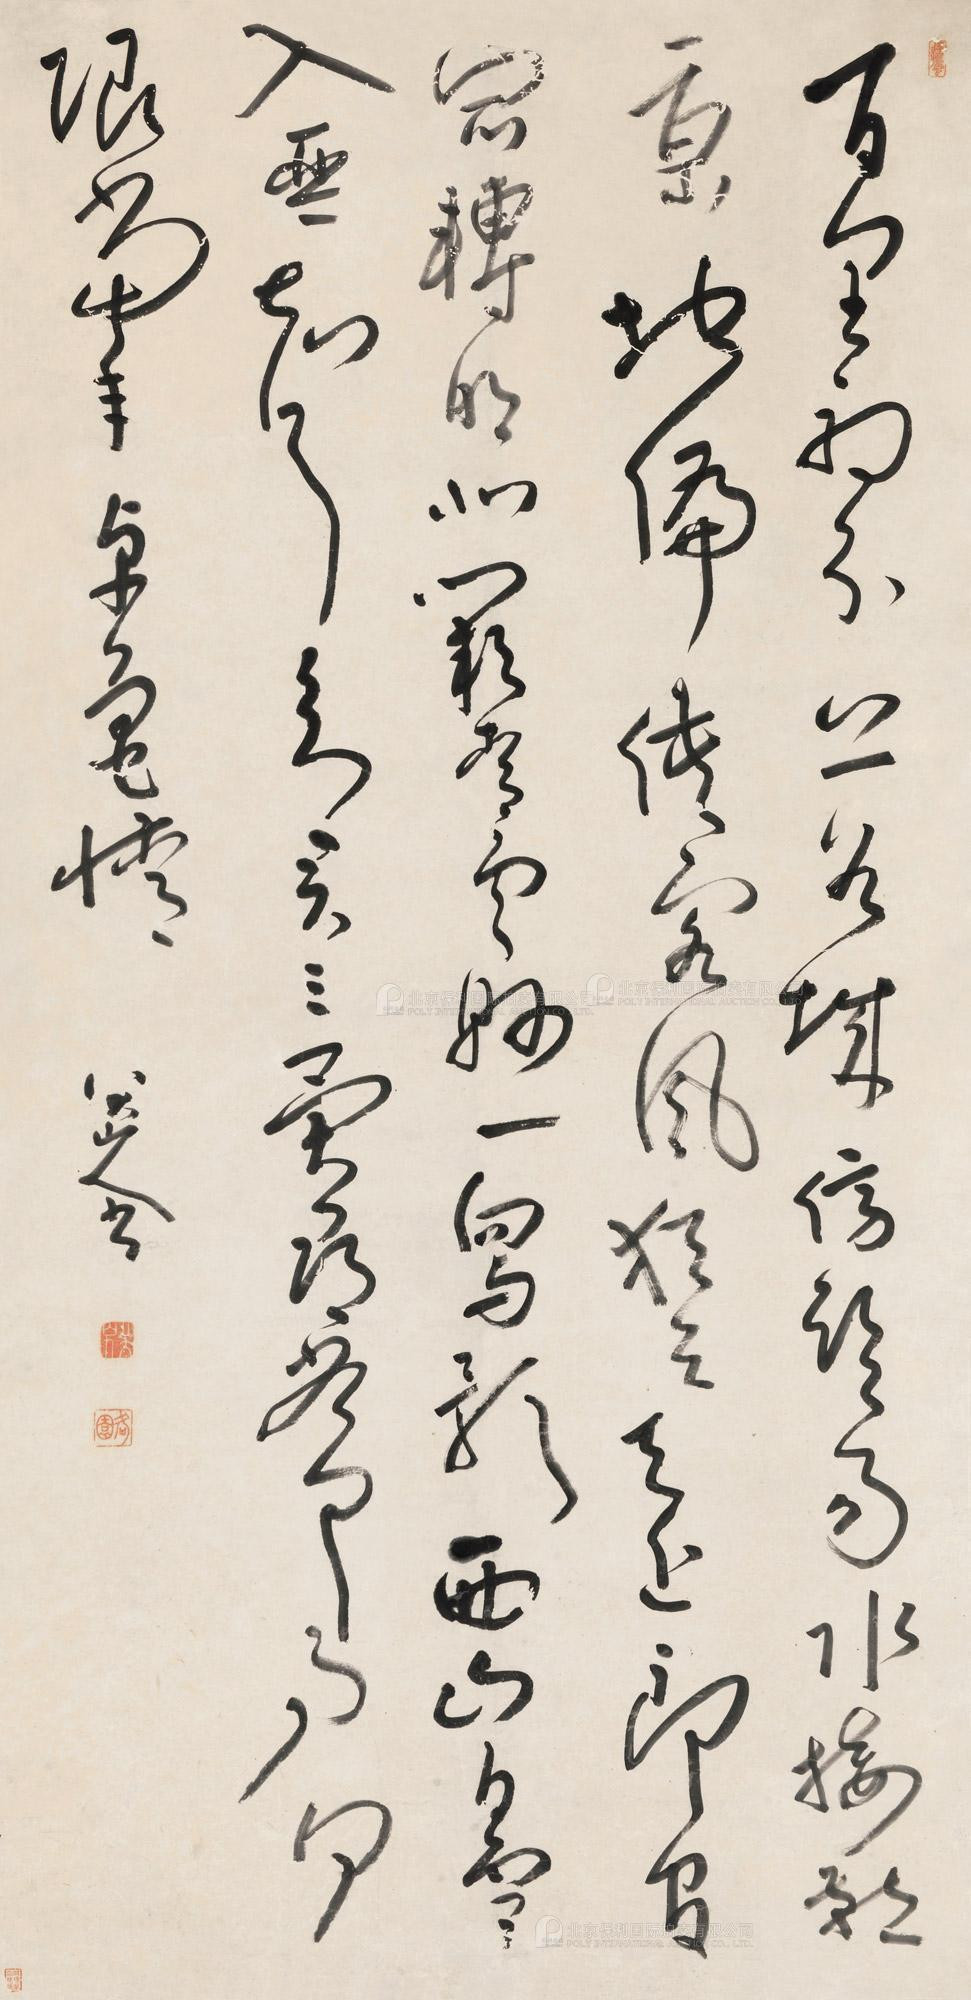 calligraphy in cursive script